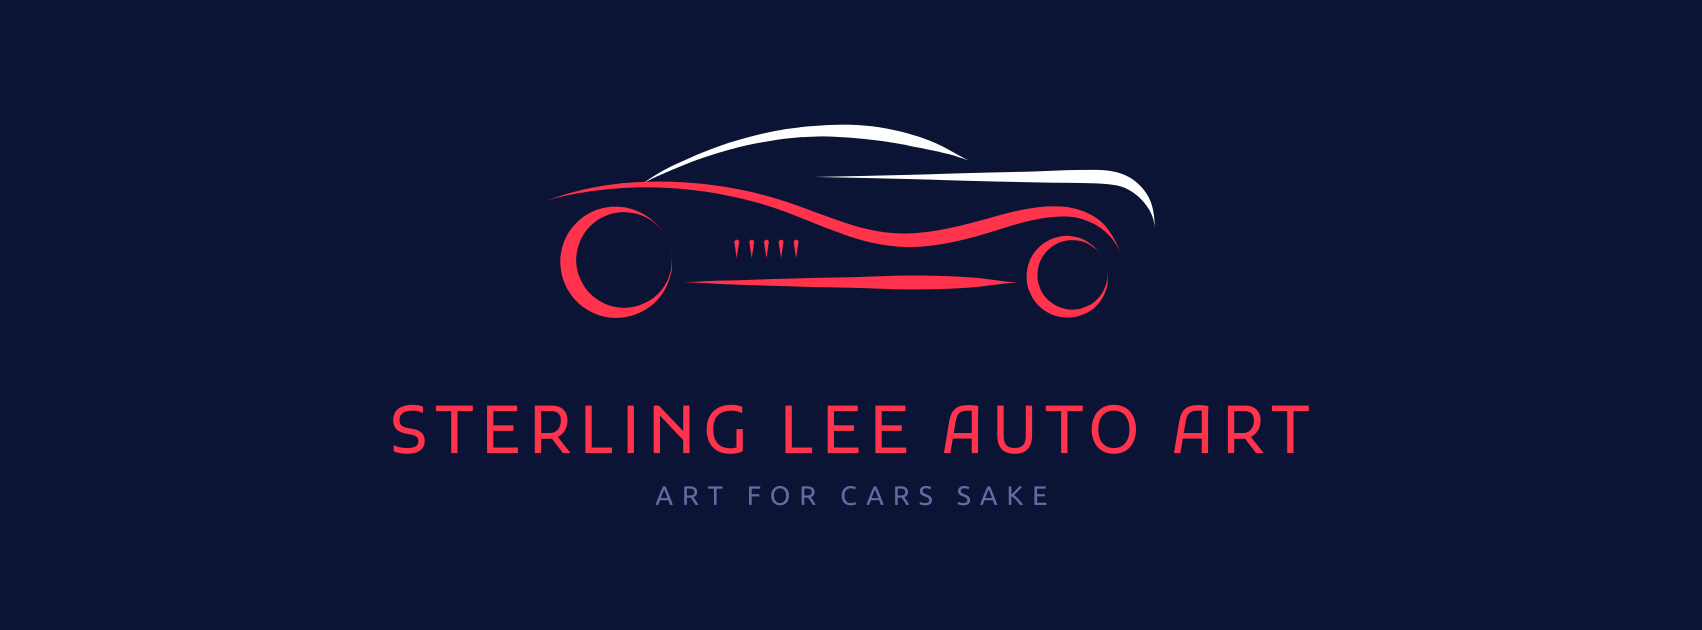 Sterling Lee Auto Art